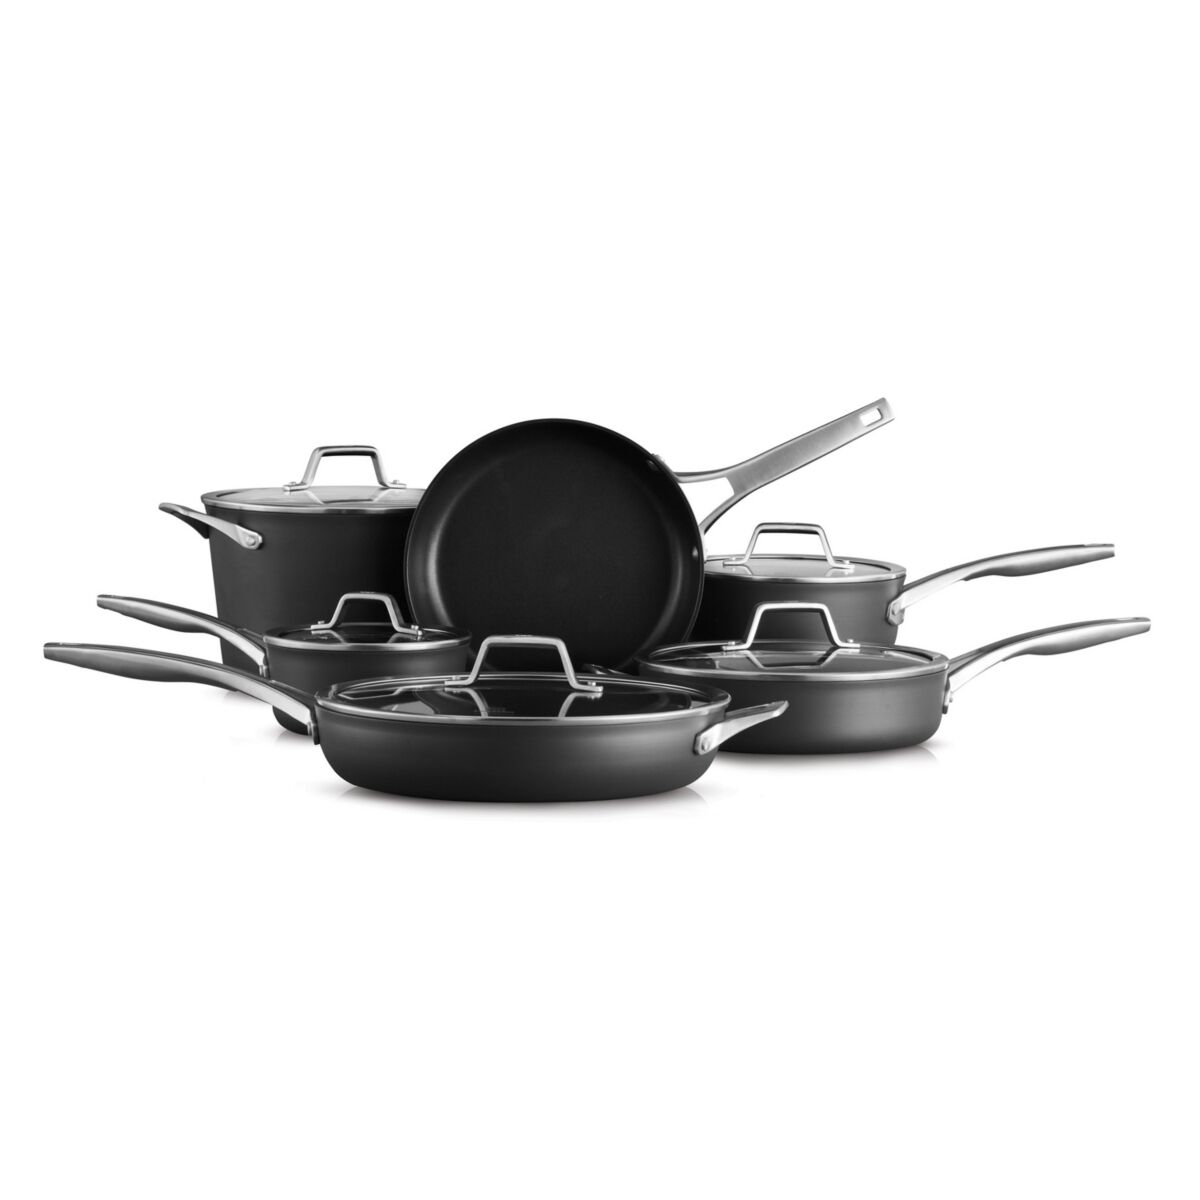 Calphalon Premier 11-pc. Hard-Anodized Nonstick Cookware Set - Black/stainless Steel